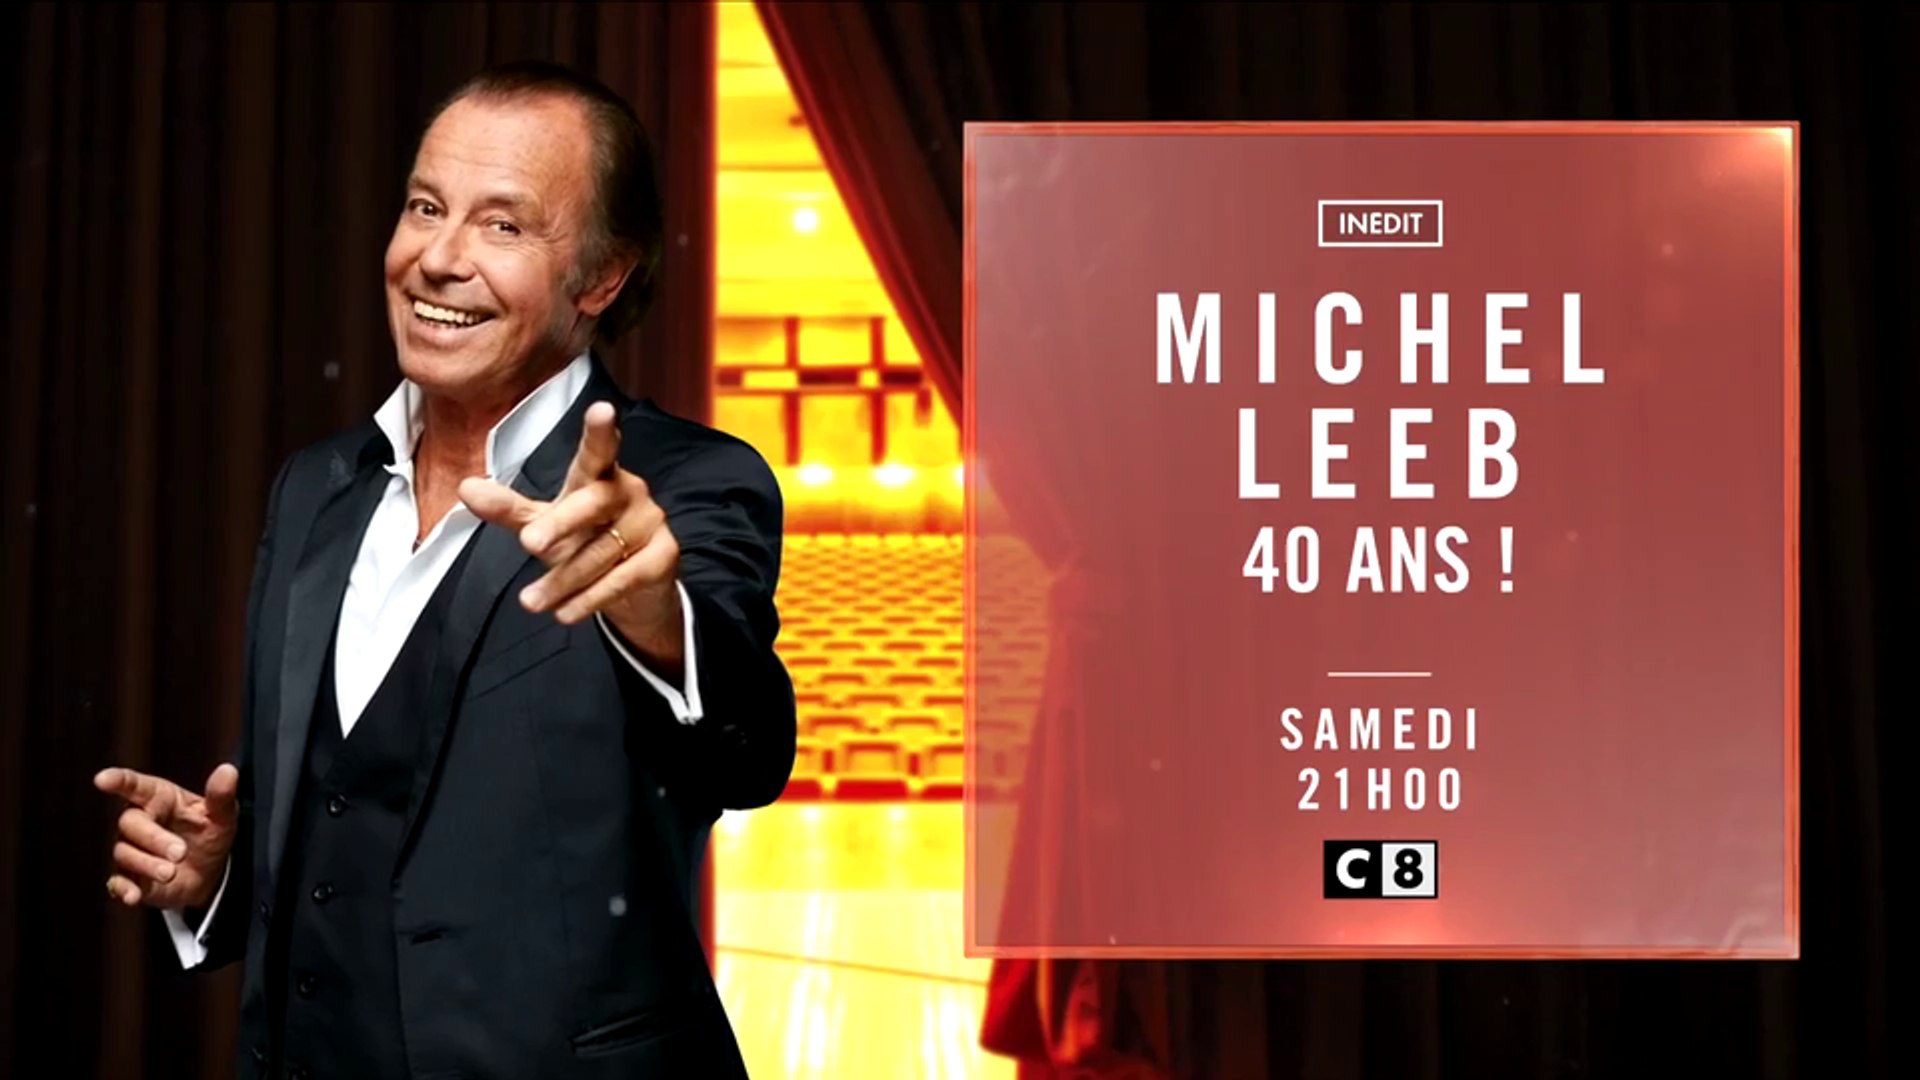 Michel Leeb 40 ans ! - c8 - 15 09 18 - Vidéo Dailymotion